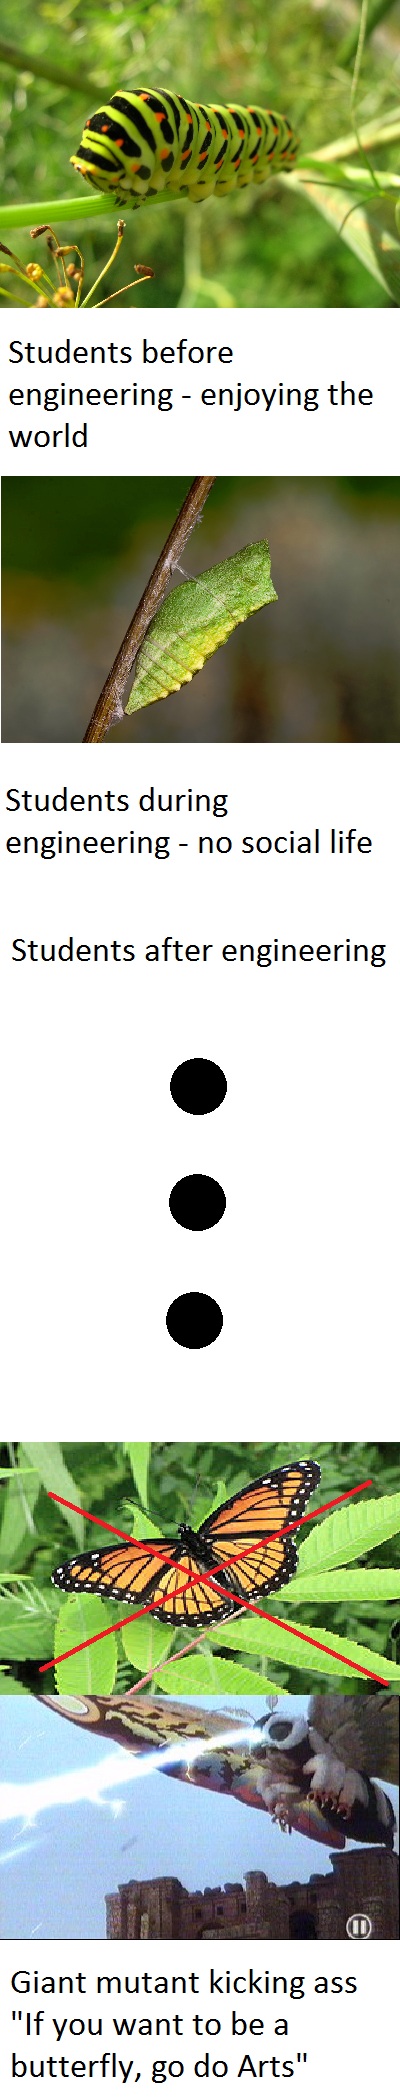 How my professor explained engineering